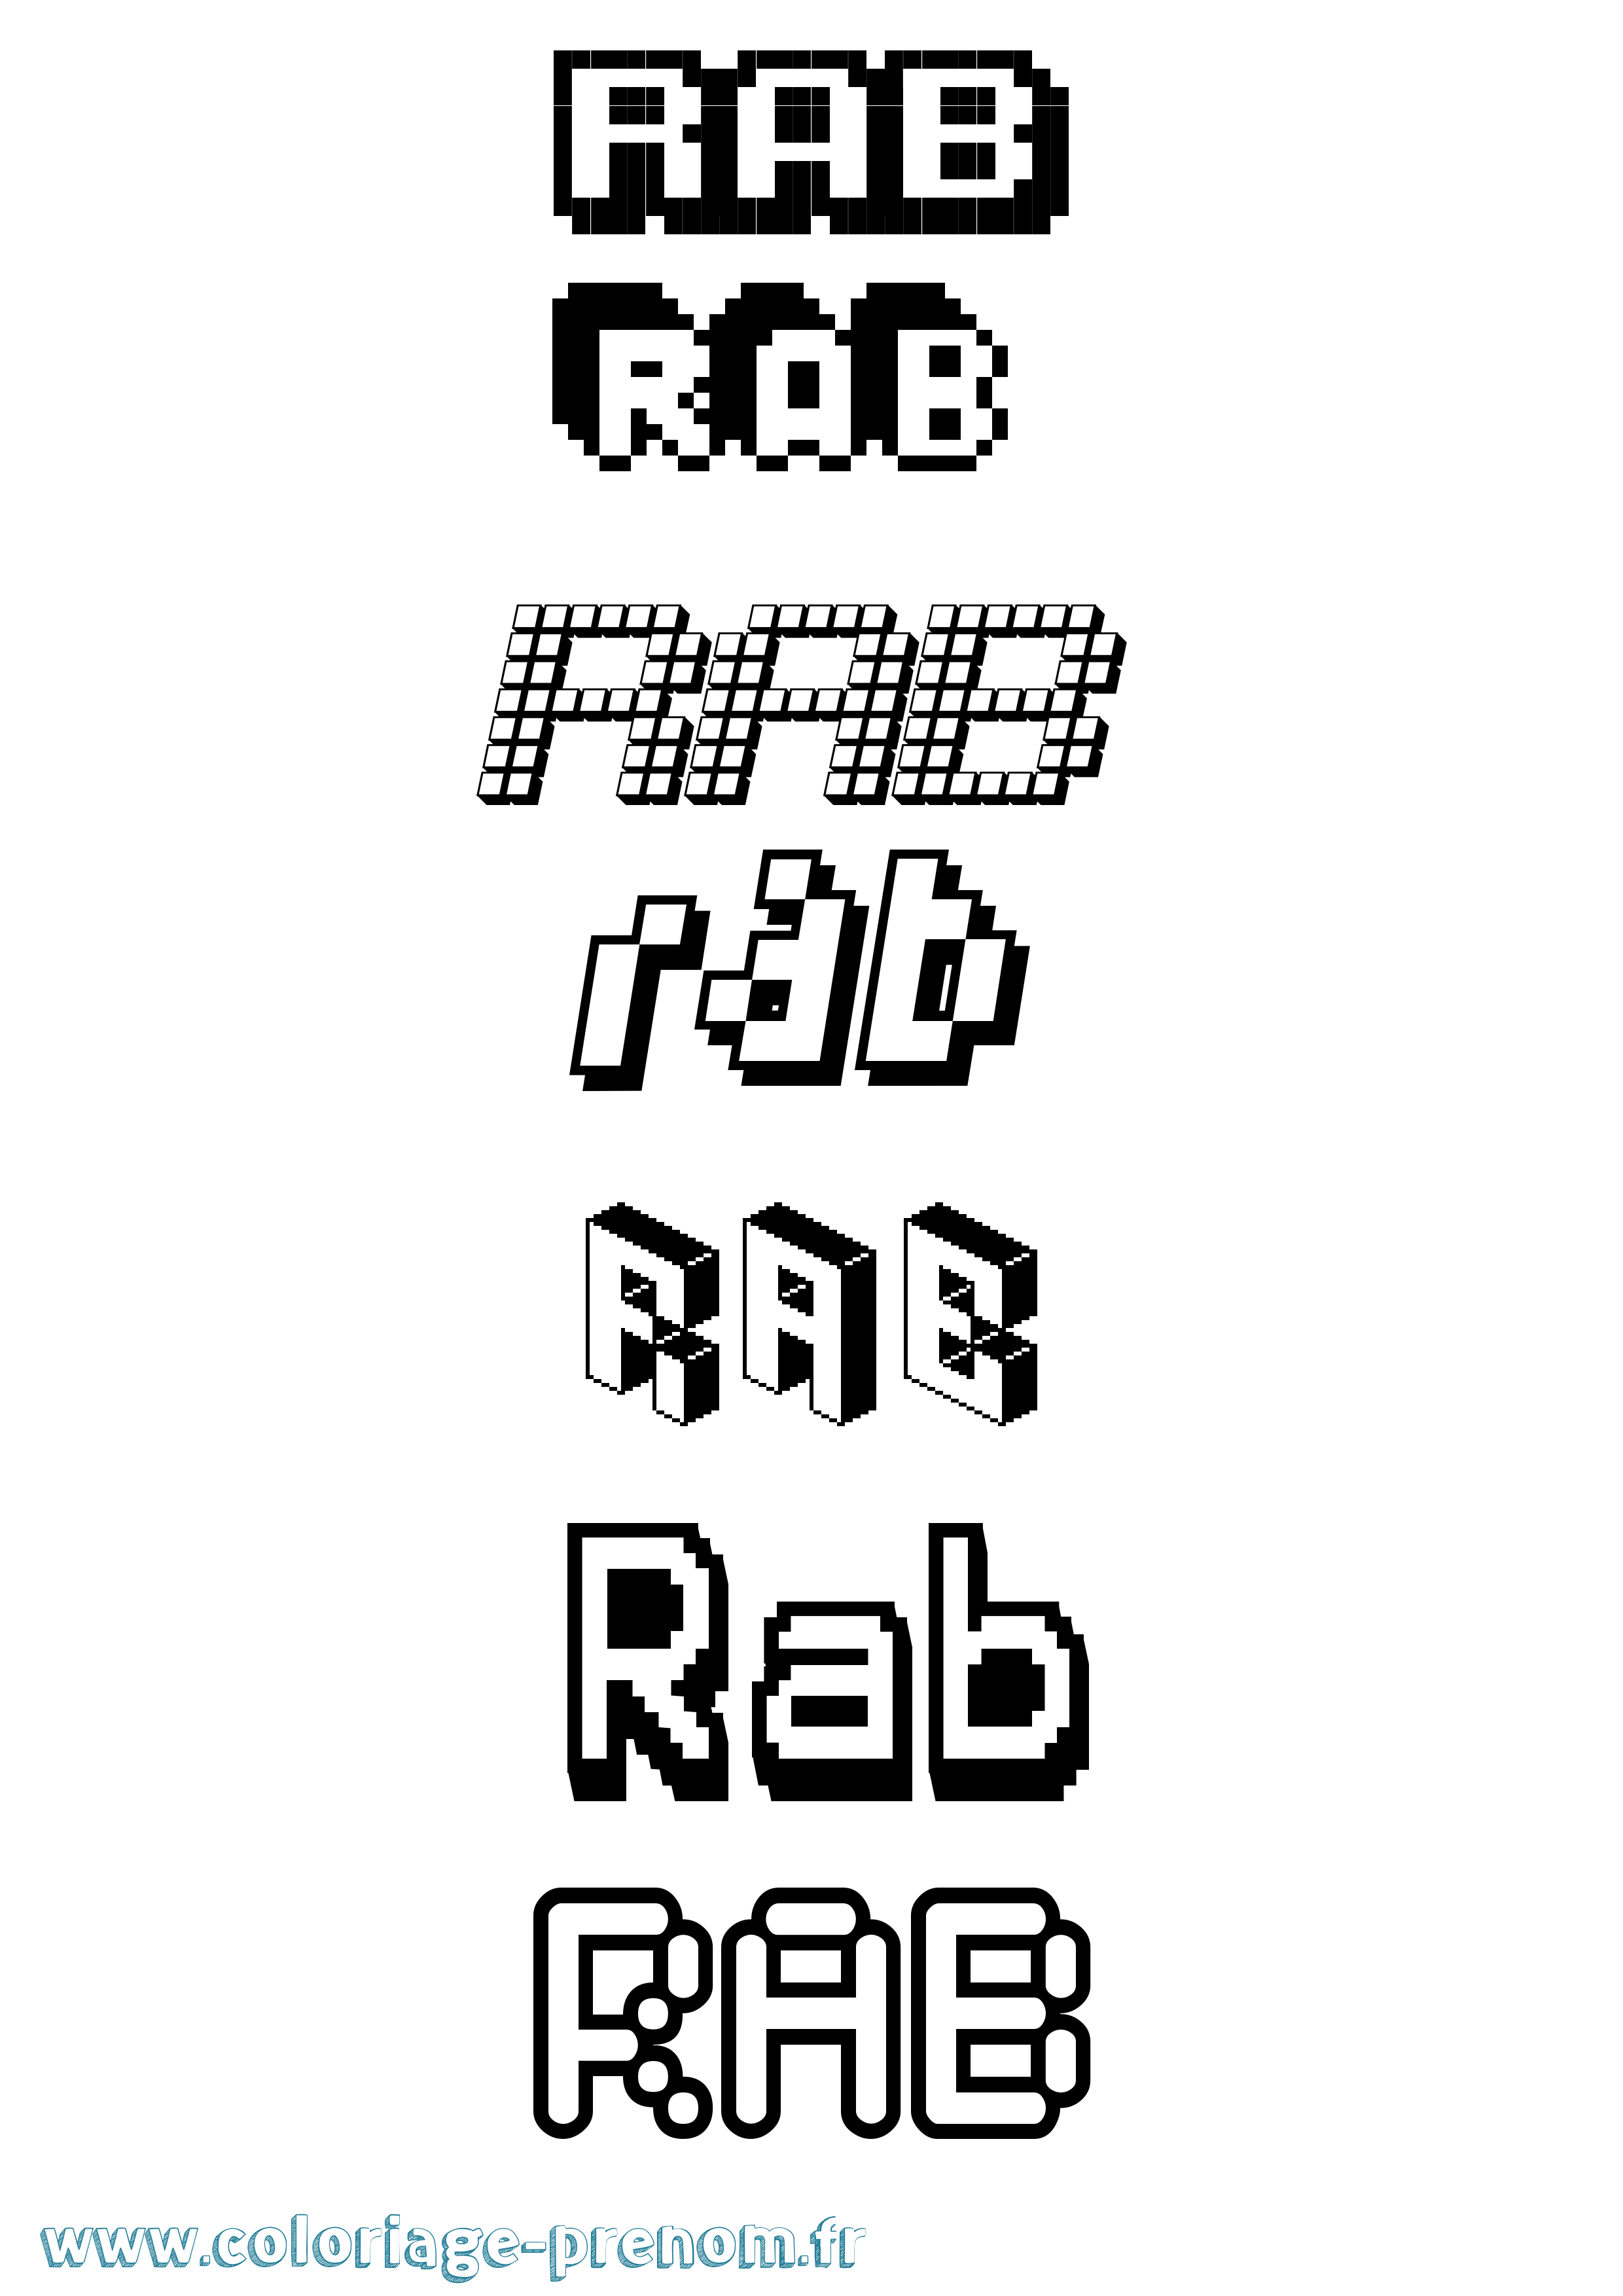 Coloriage prénom Rab Pixel